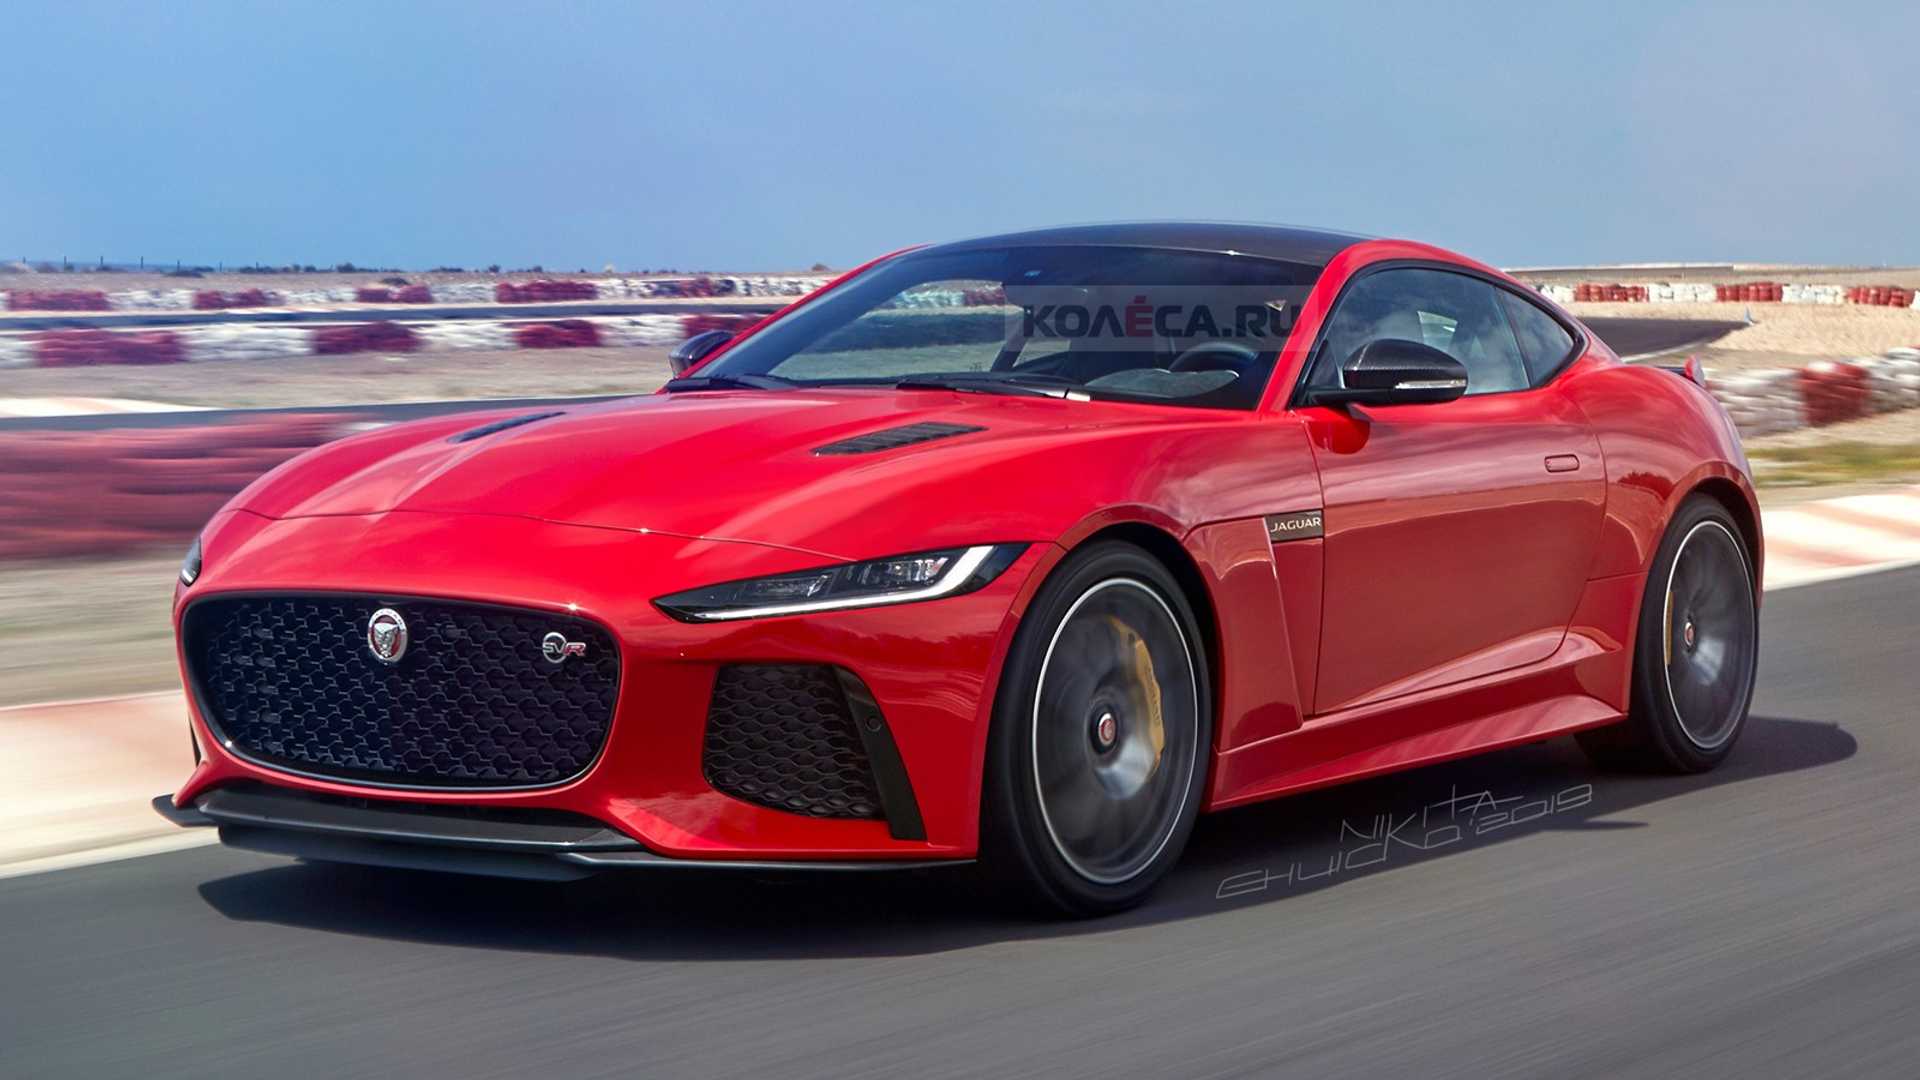 Jaguar F Type Looks Sleek In Rendering Based On Spy Shots